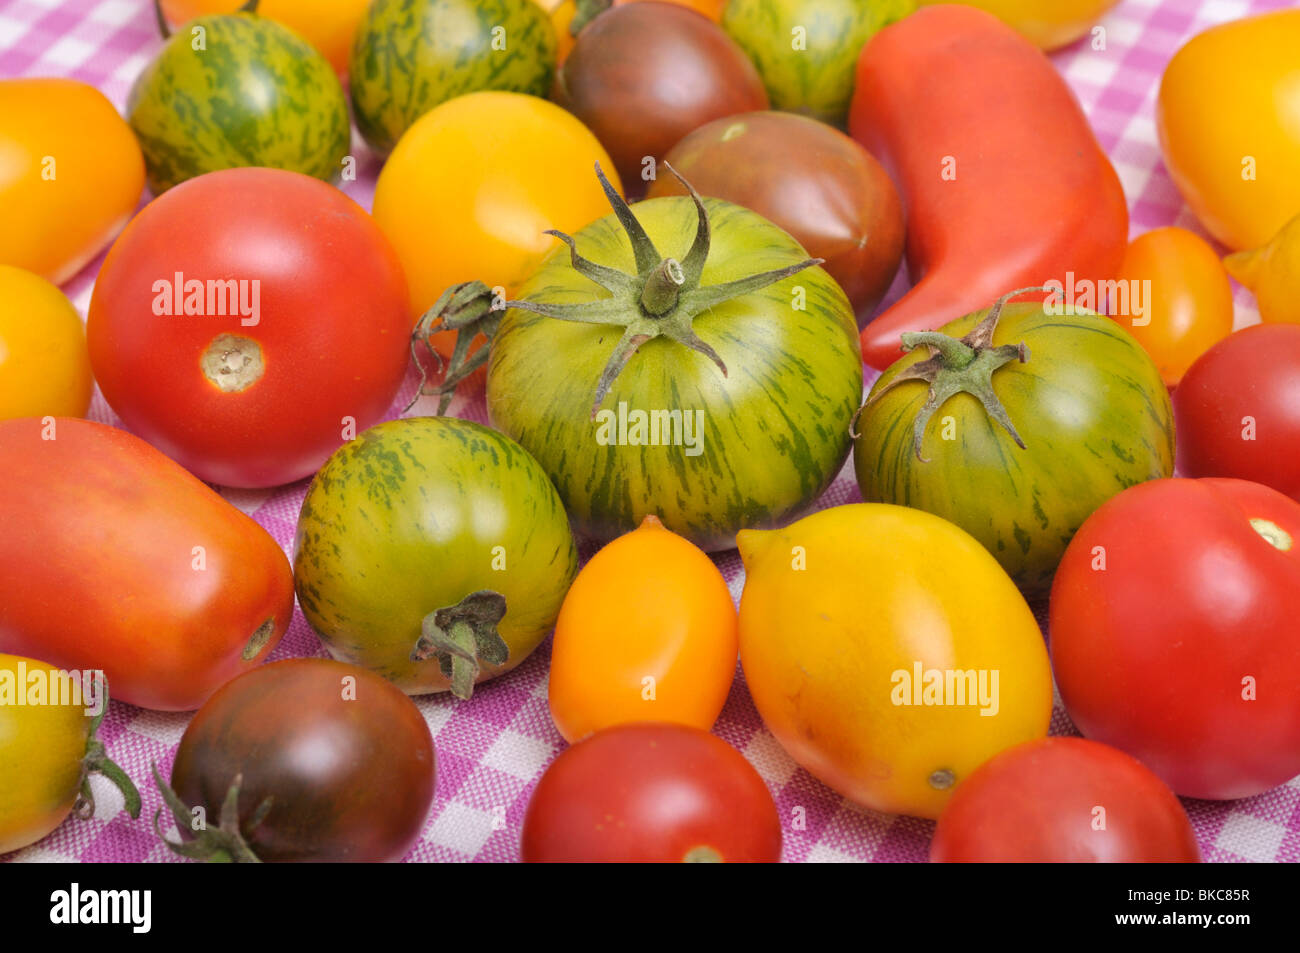 Tomatoes (Lycopersicon esculentum) Stock Photo